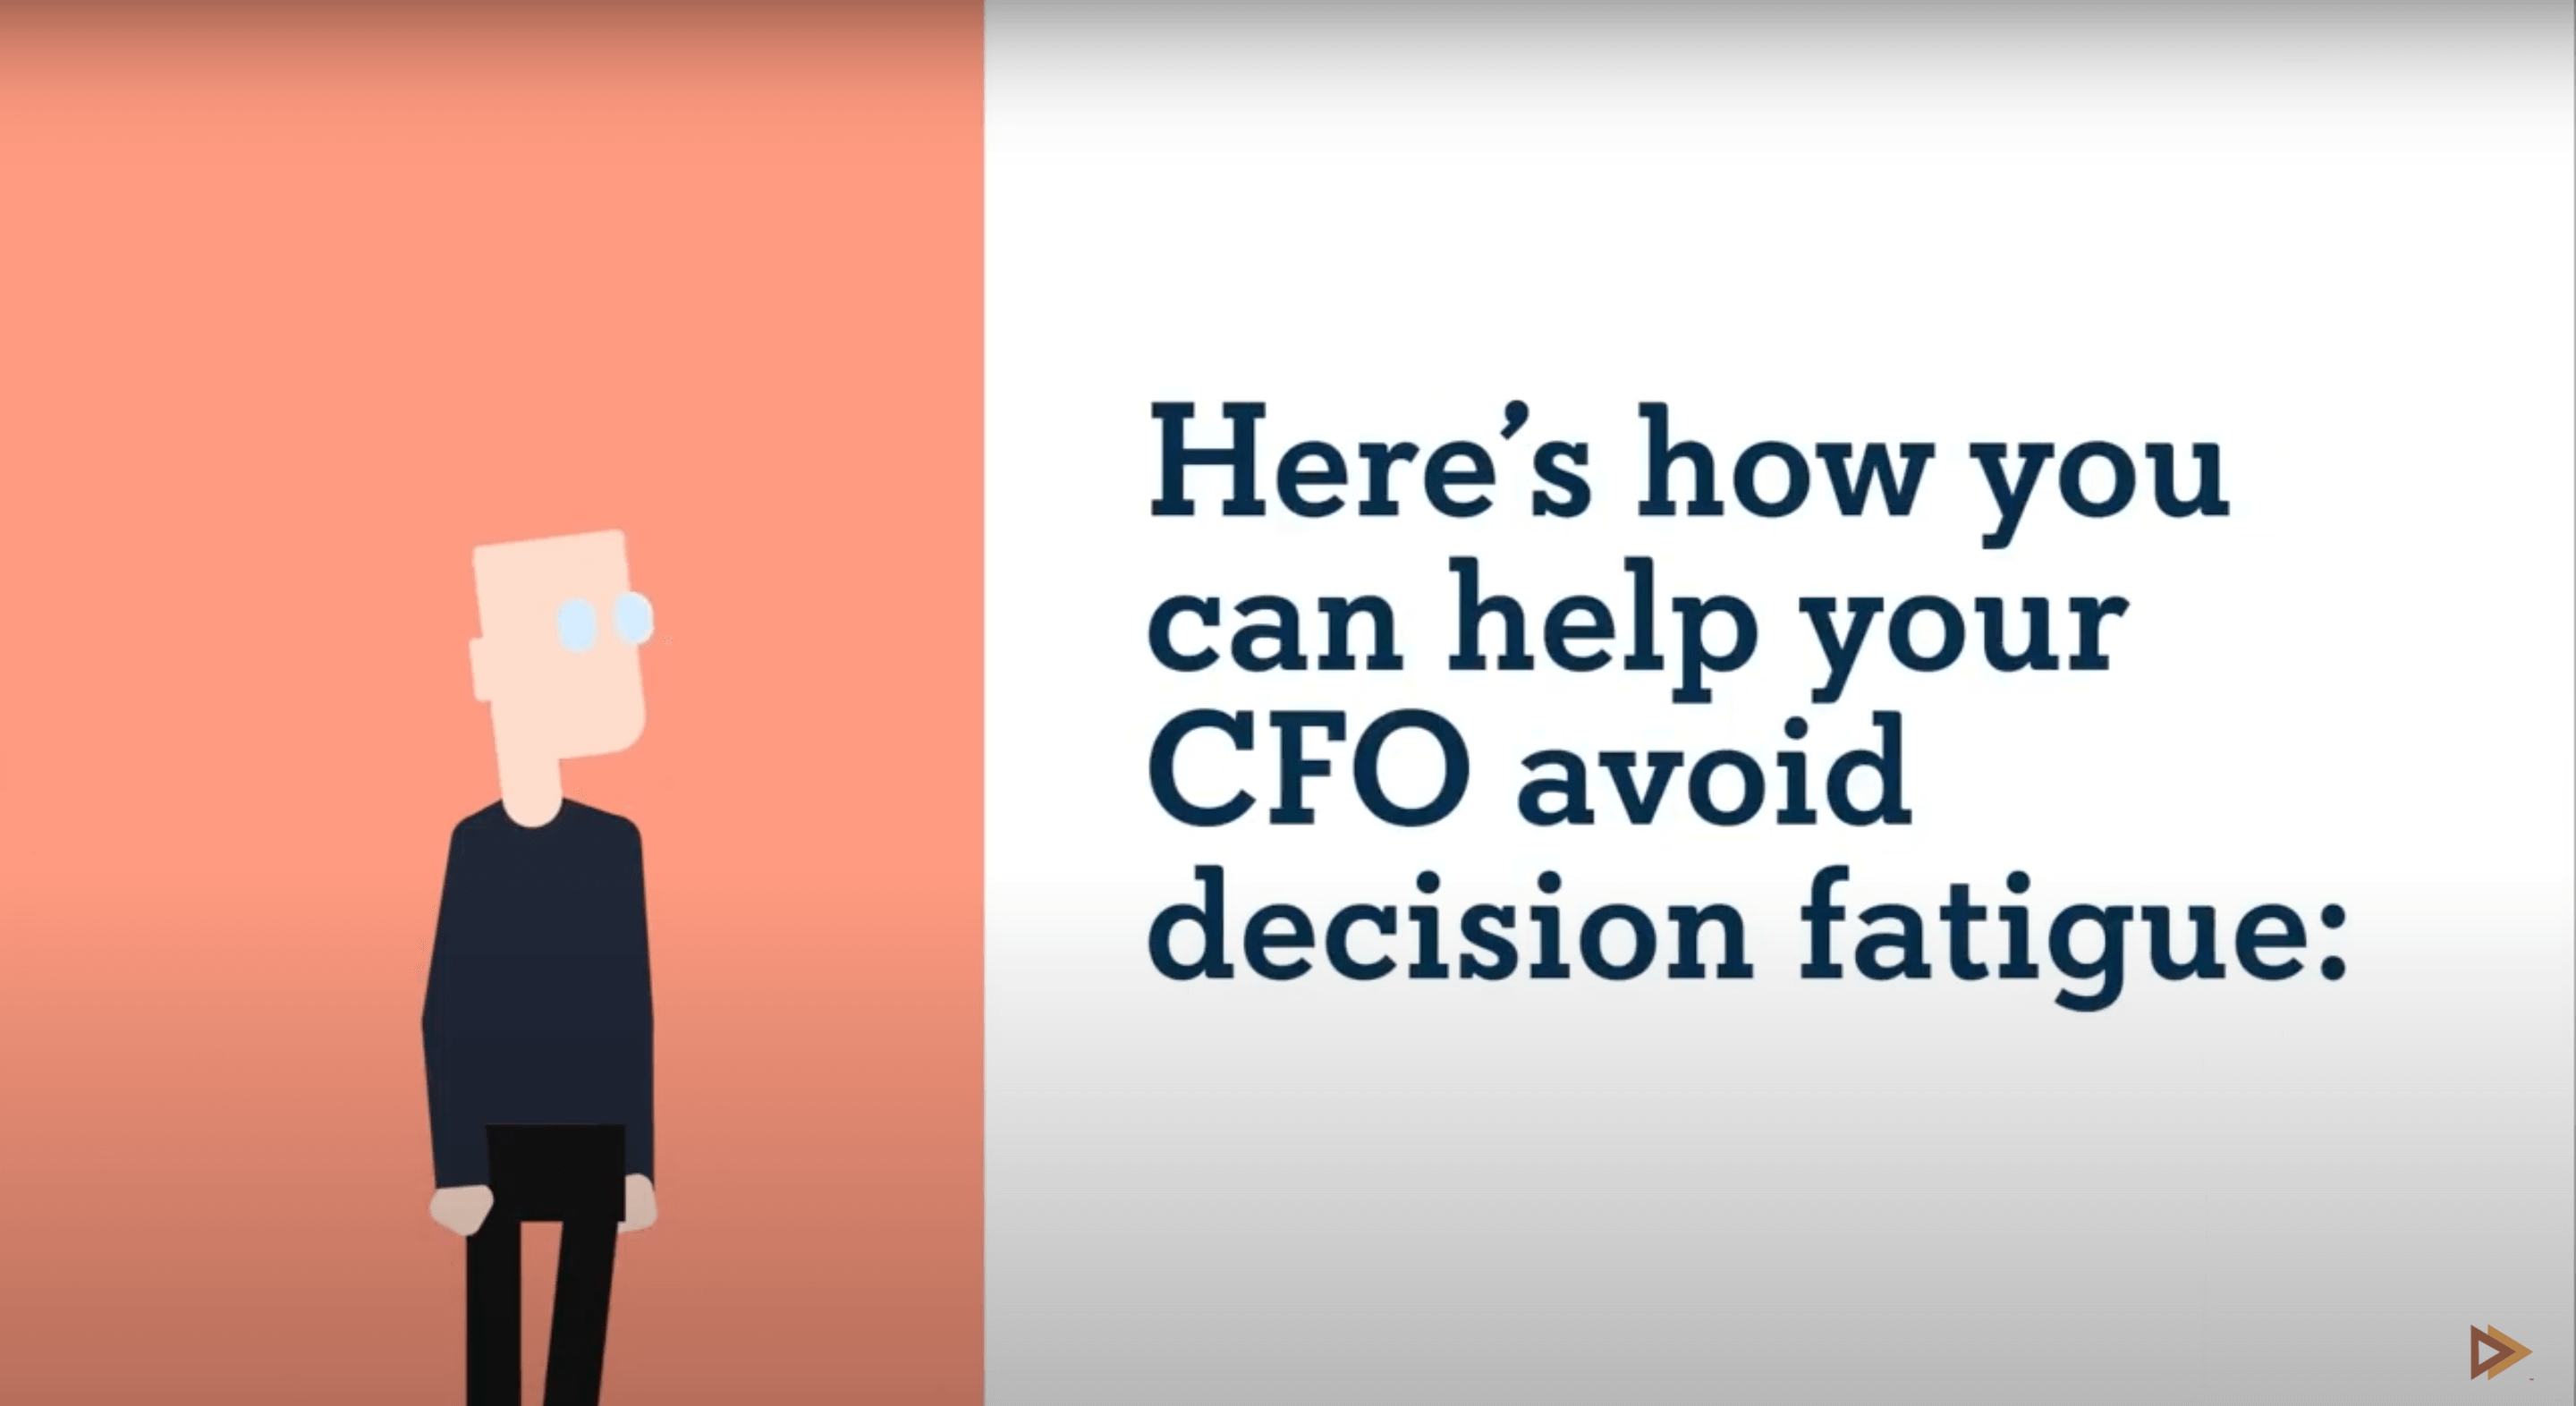 Habits to Help CFOs Avoid Decision Fatigue